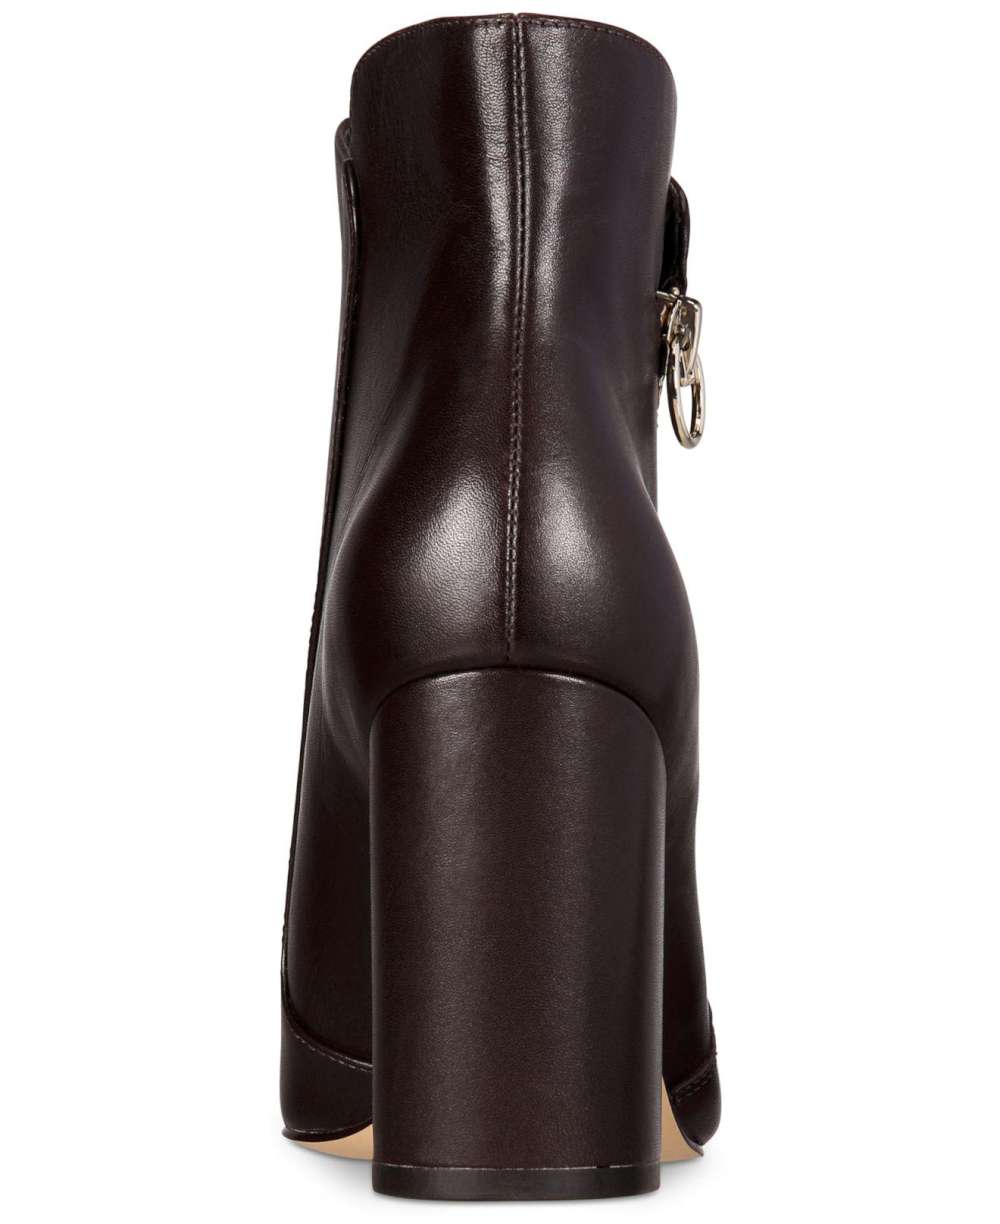 russity zippered booties